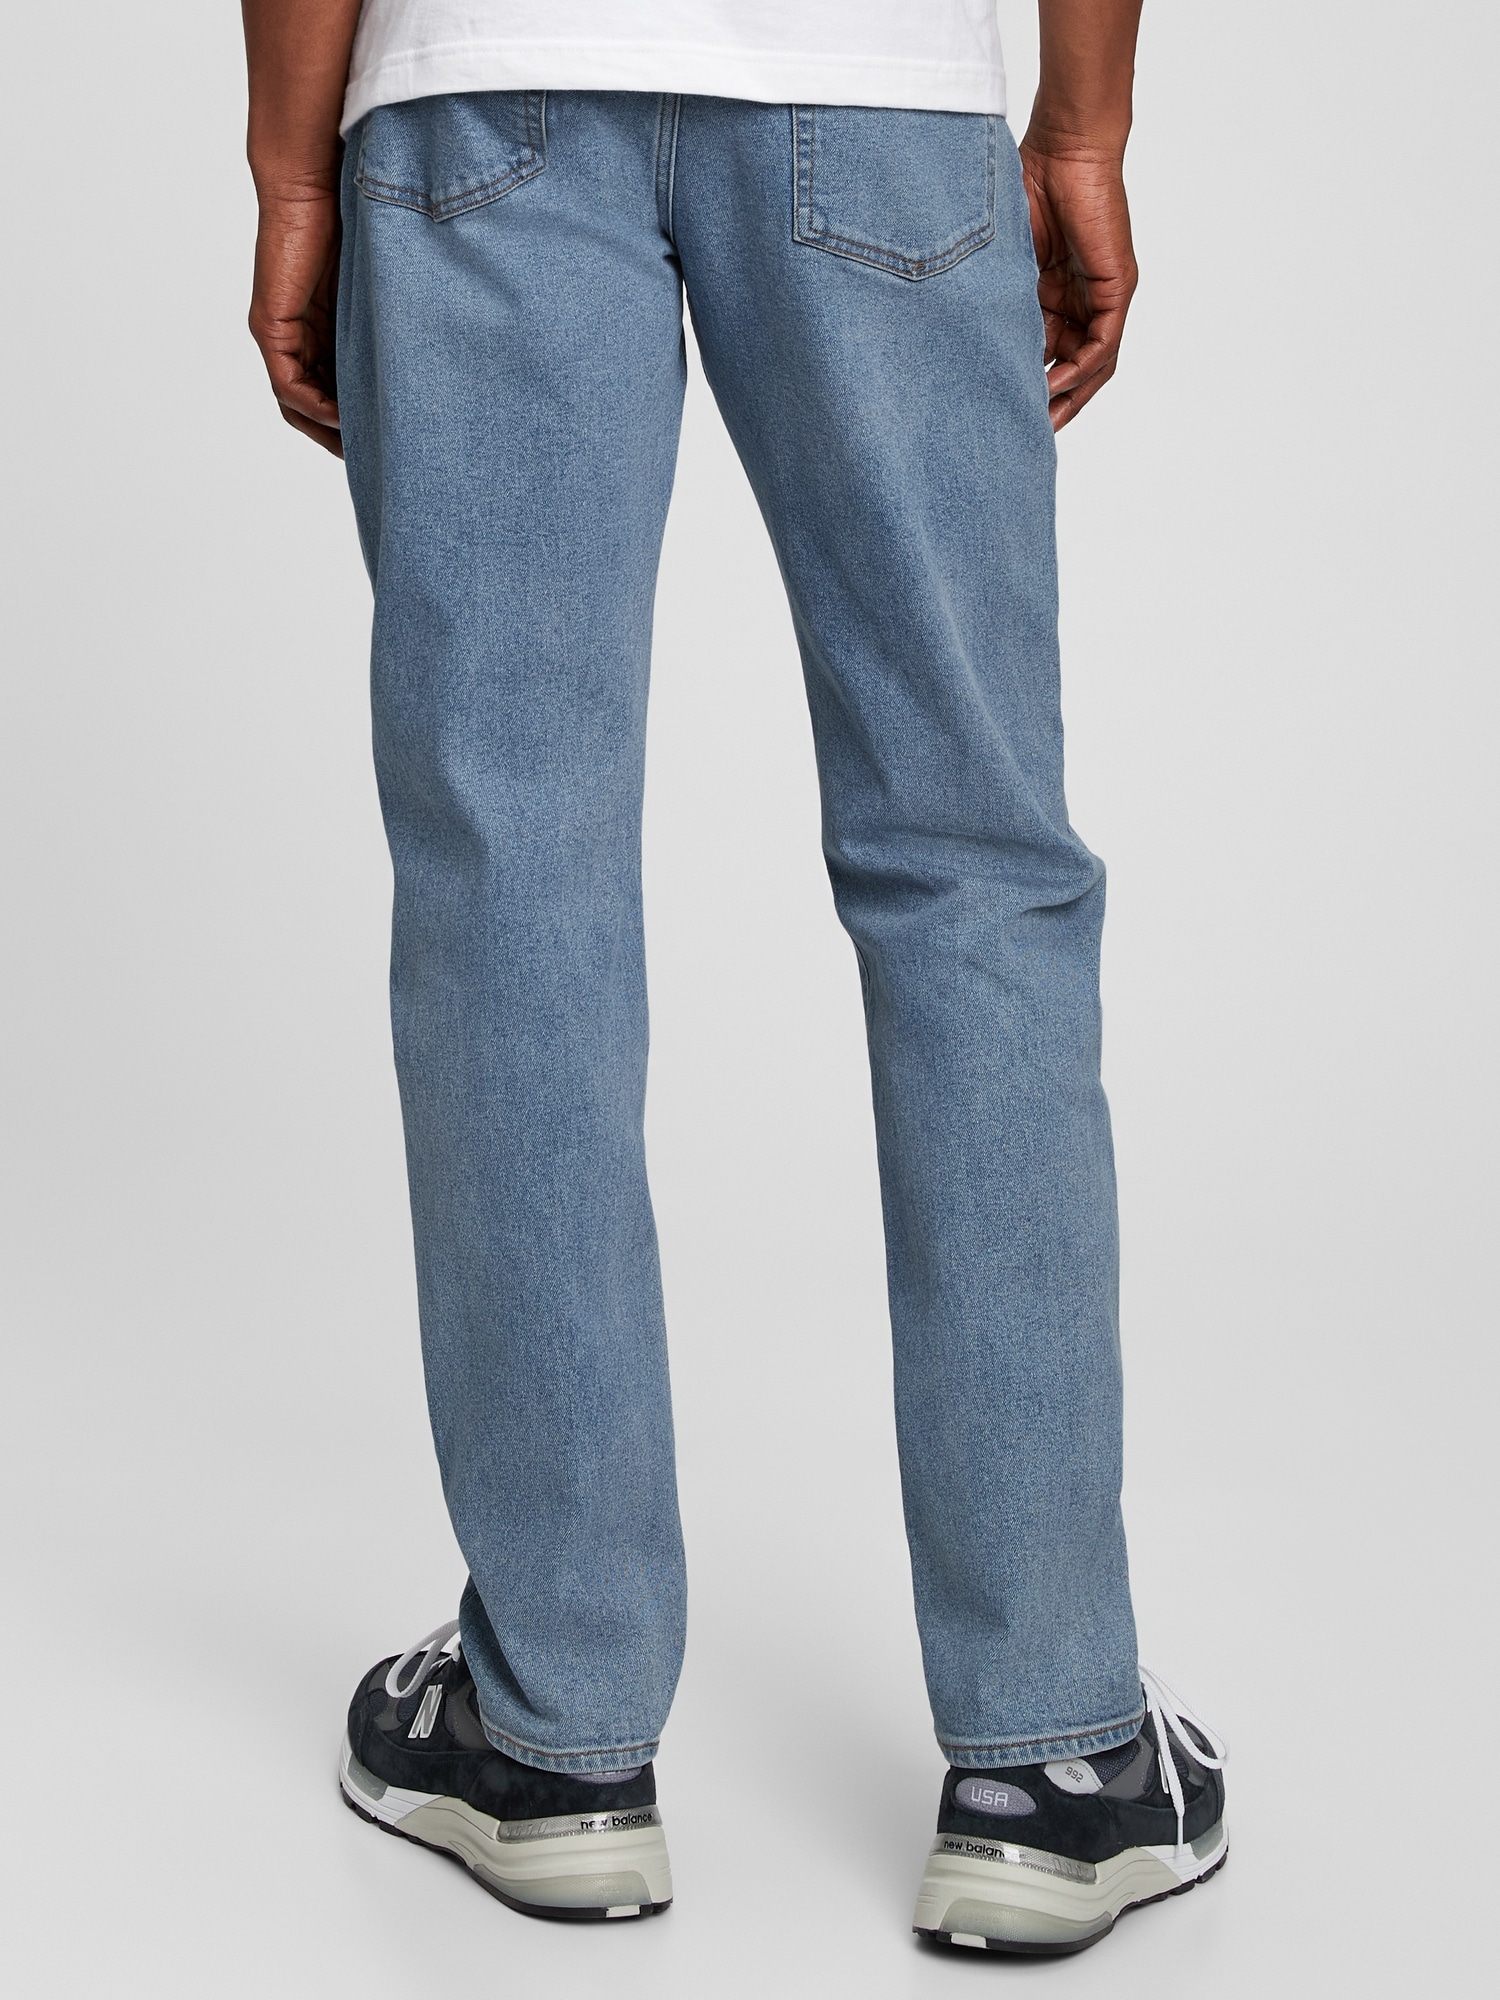 Gap  Jean fits, Slim jeans, Jeans fit